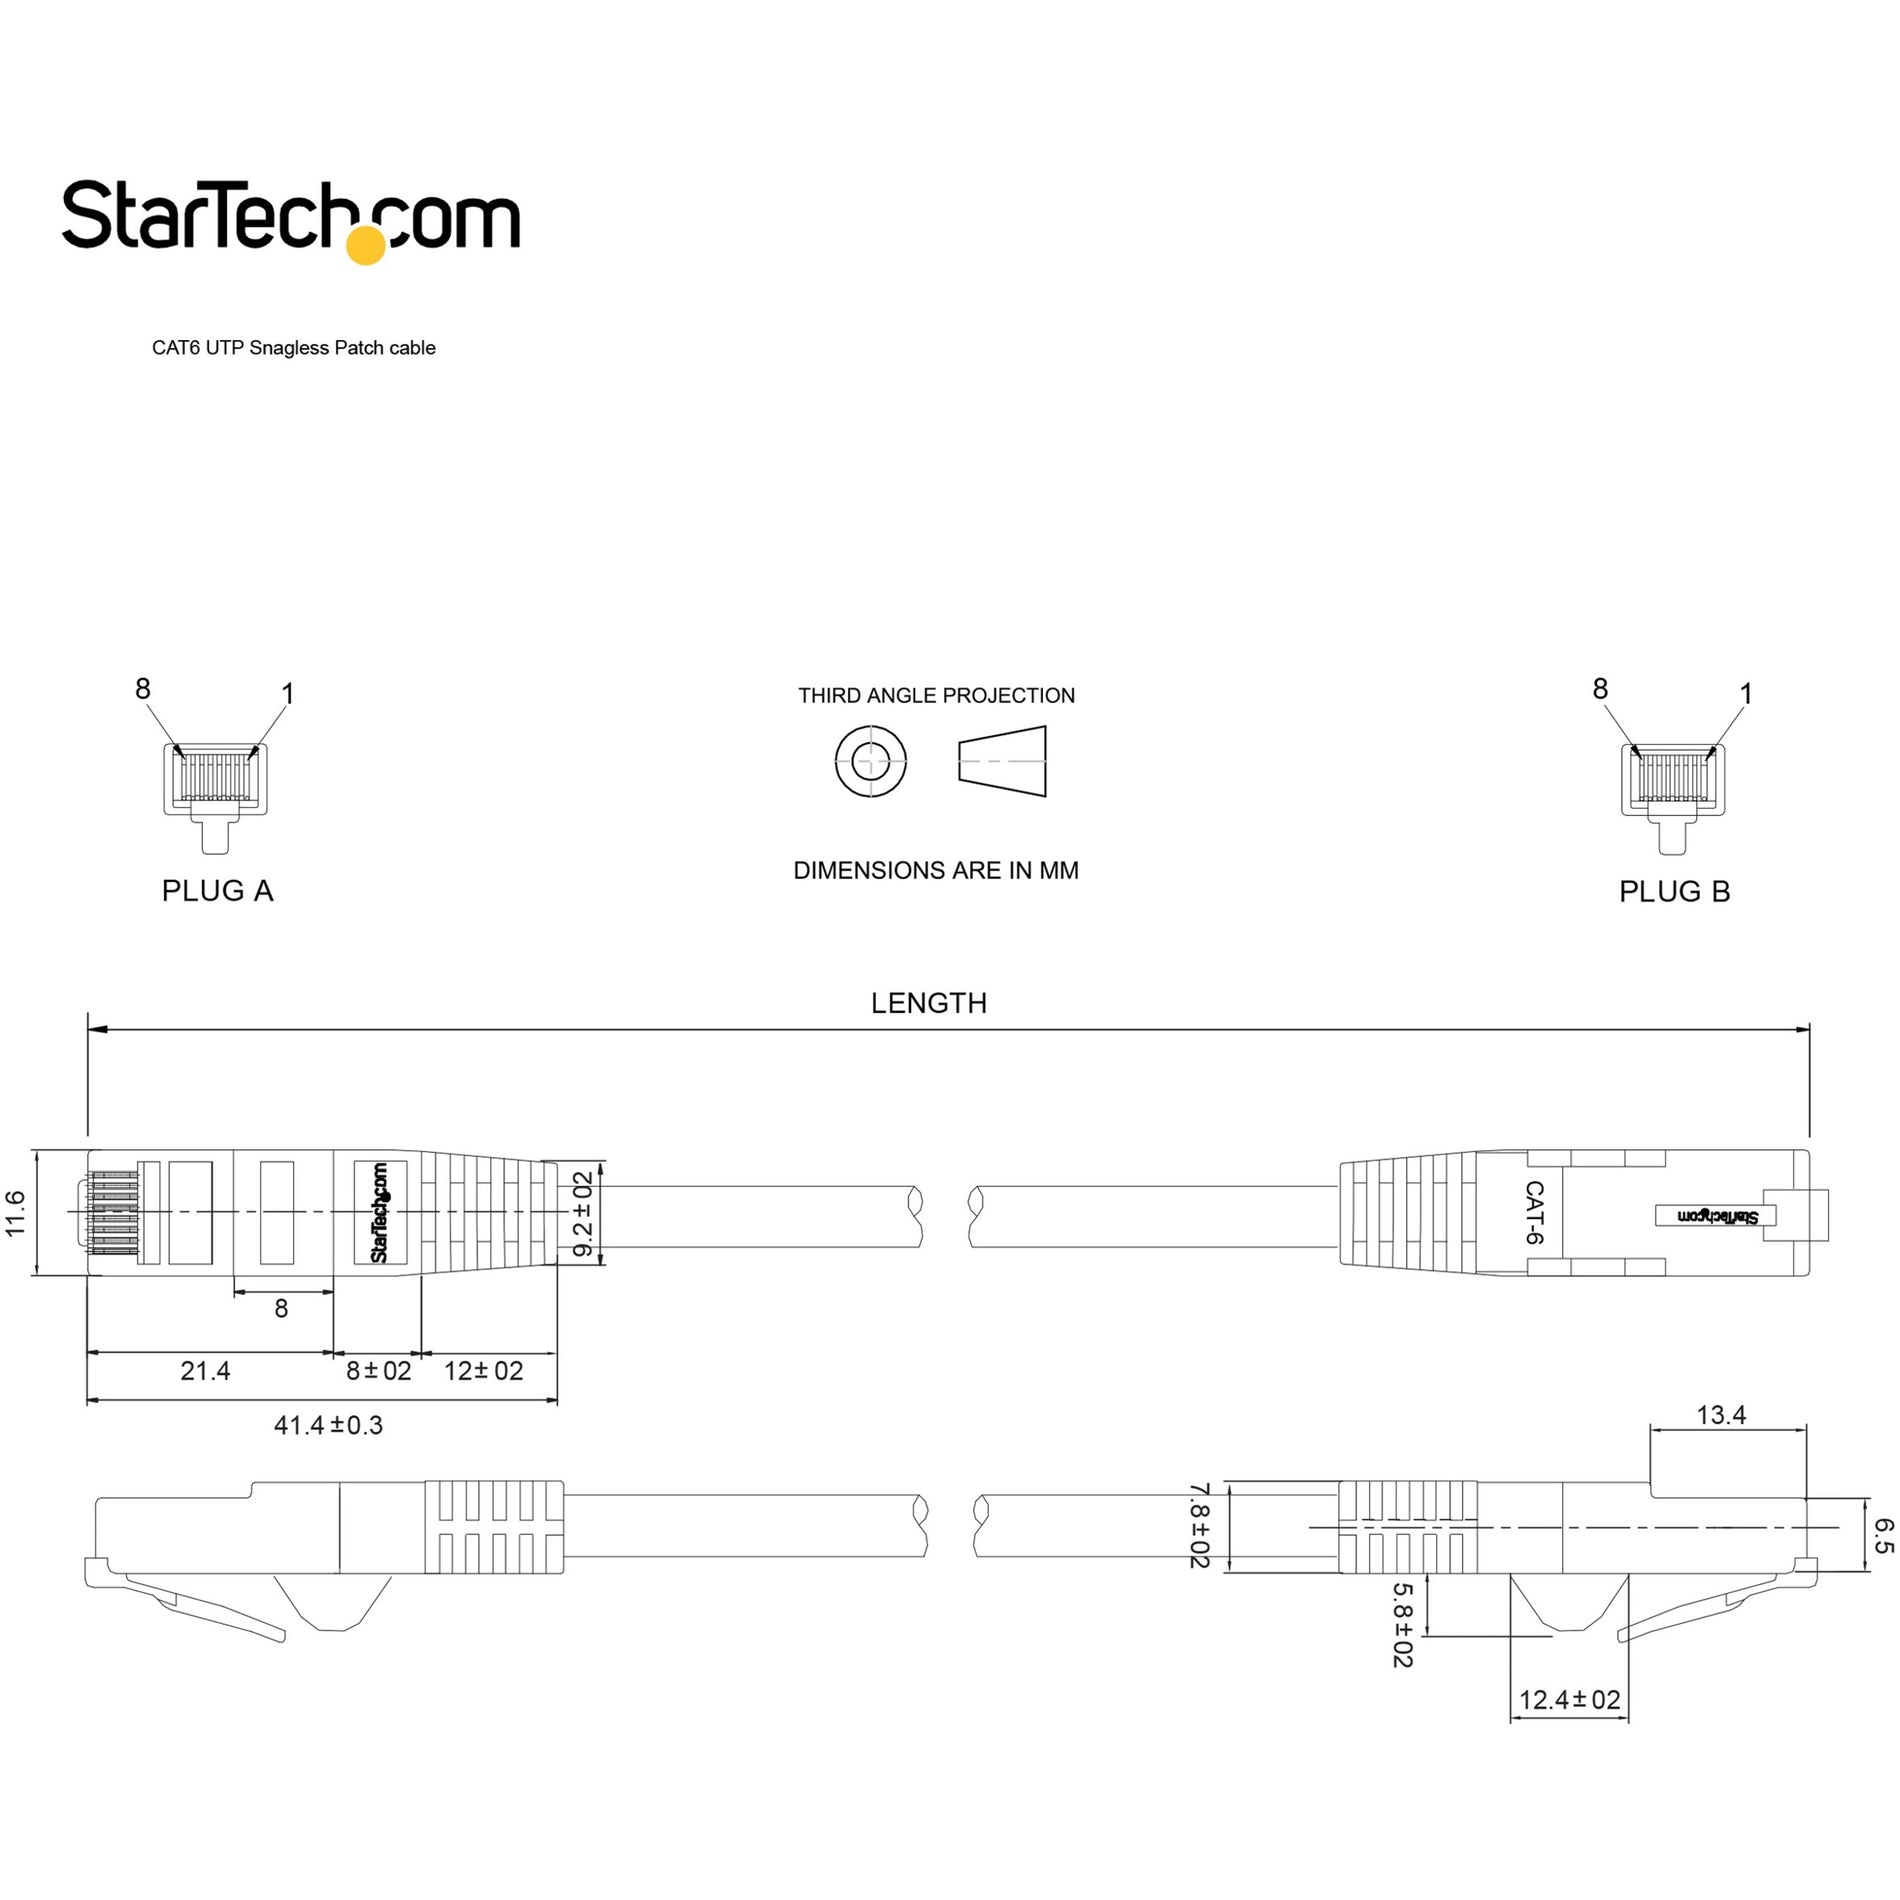 StarTech.com N6PATCH5BL Cat.6 Patch Cable, 5 ft Blue Snagless UTP, ETL Verified